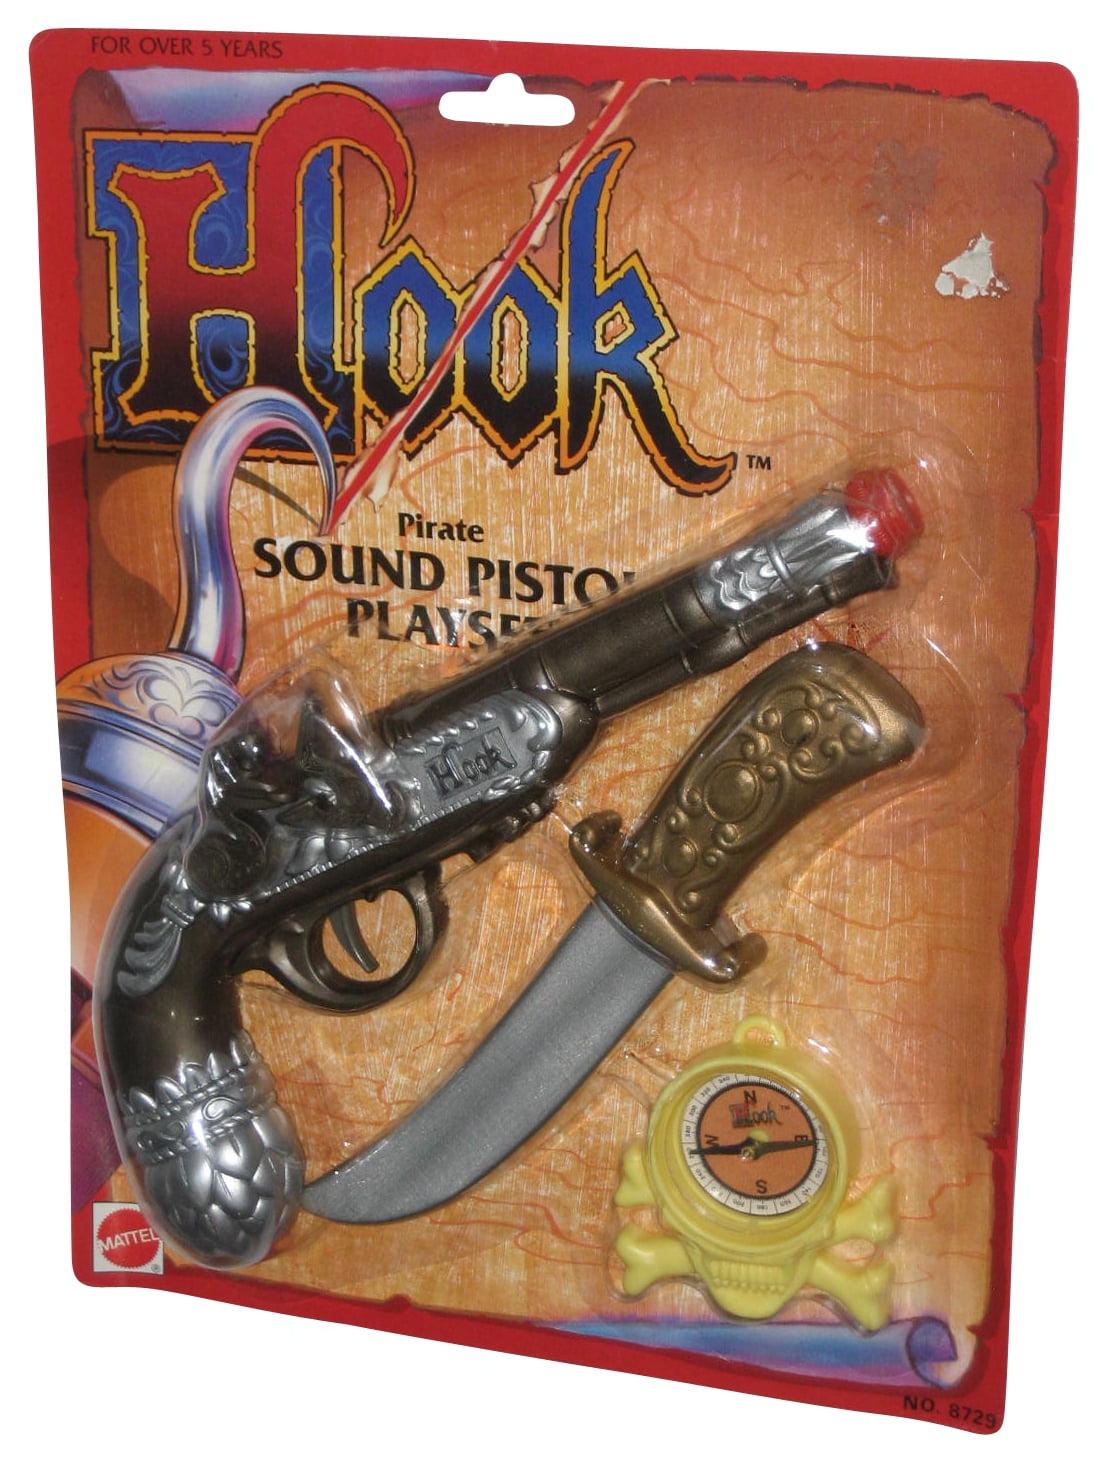 Hook Lost Boy Pirate Sound Pistol, Dagger & Compass (1991) Mattel Weapons  Toy Set